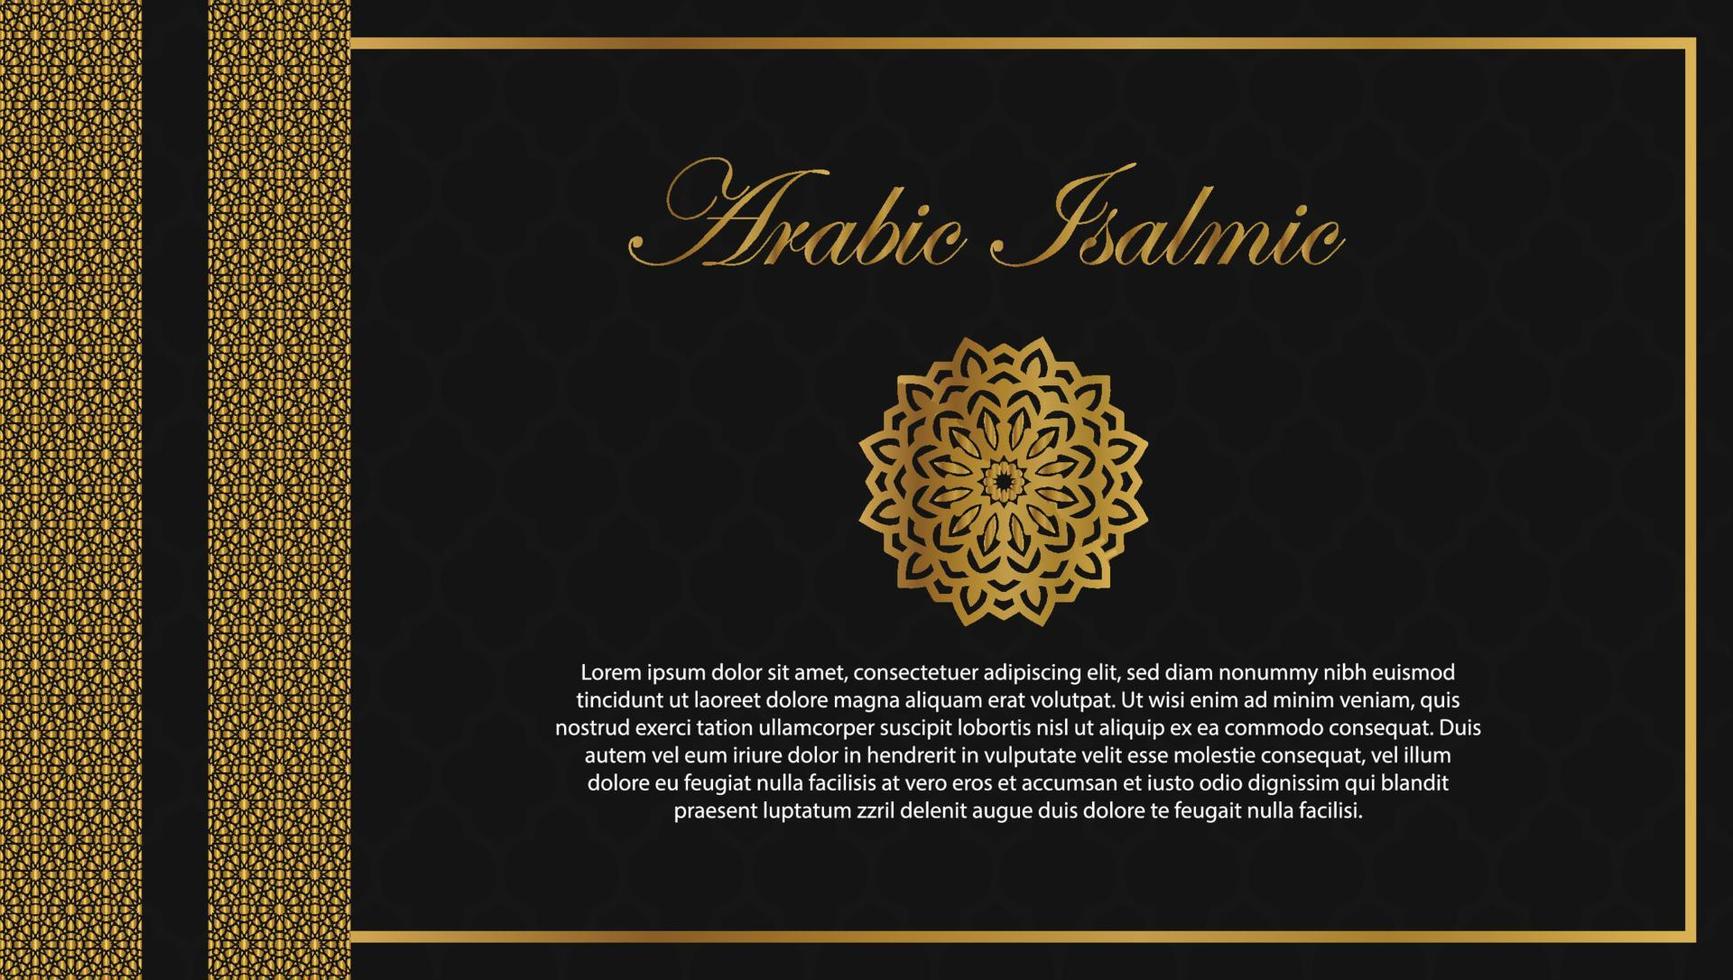 Arabic Islamic Elegant black and Golden Luxury Ornamental Background with Islamic Pattern and Decorative Ornament Border Frame stock illustration vector